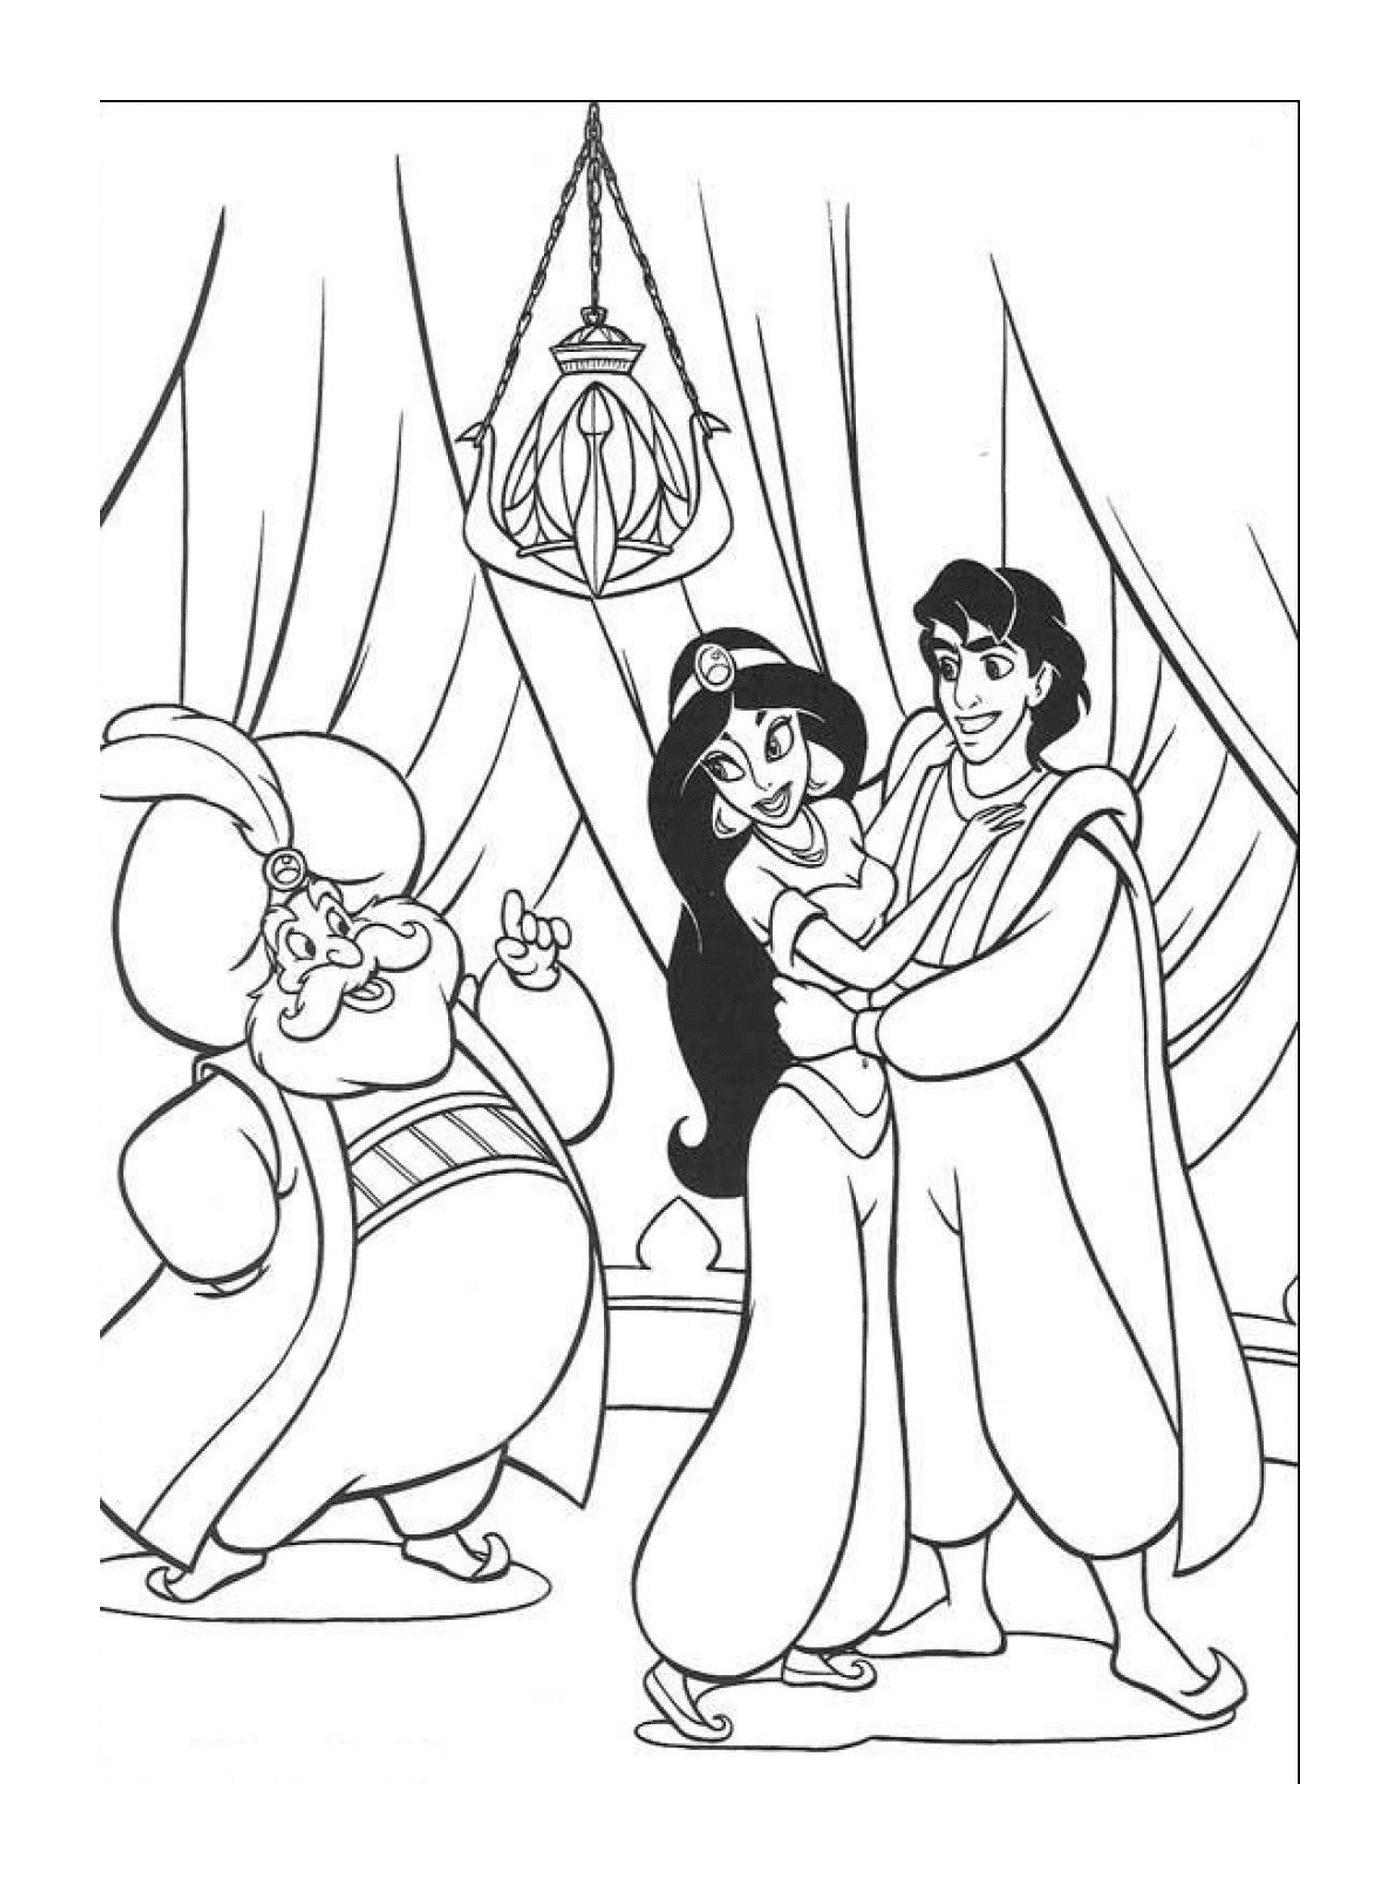  Aladdin dancing with Jasmine 